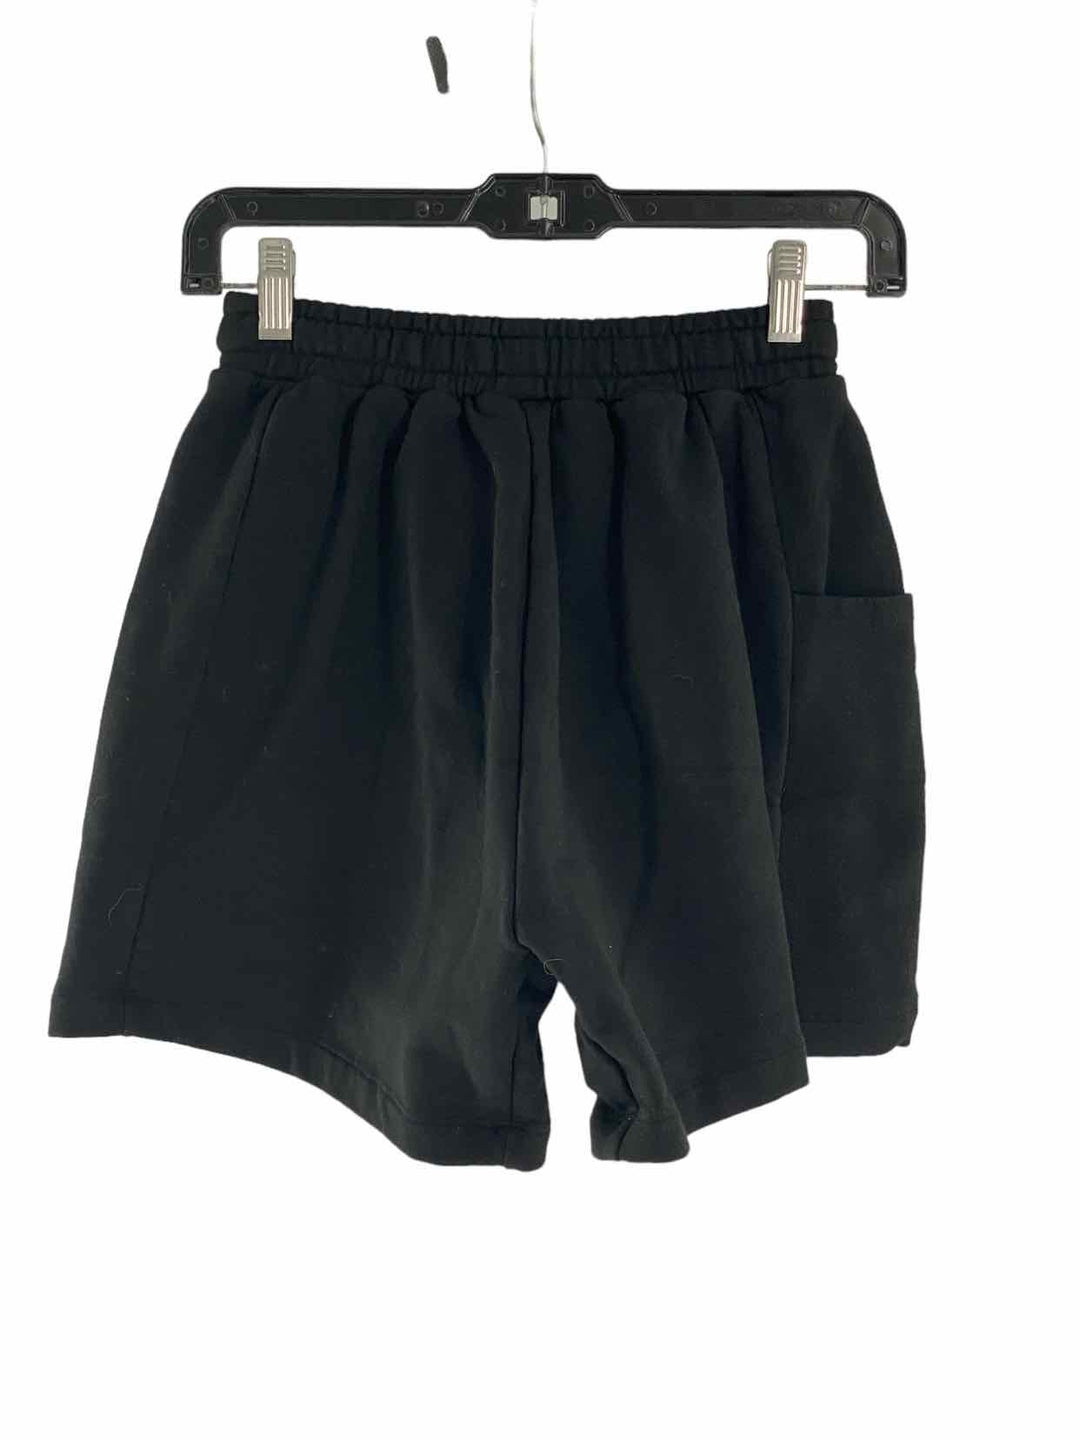 Unknown Brand Size XS Black Shorts